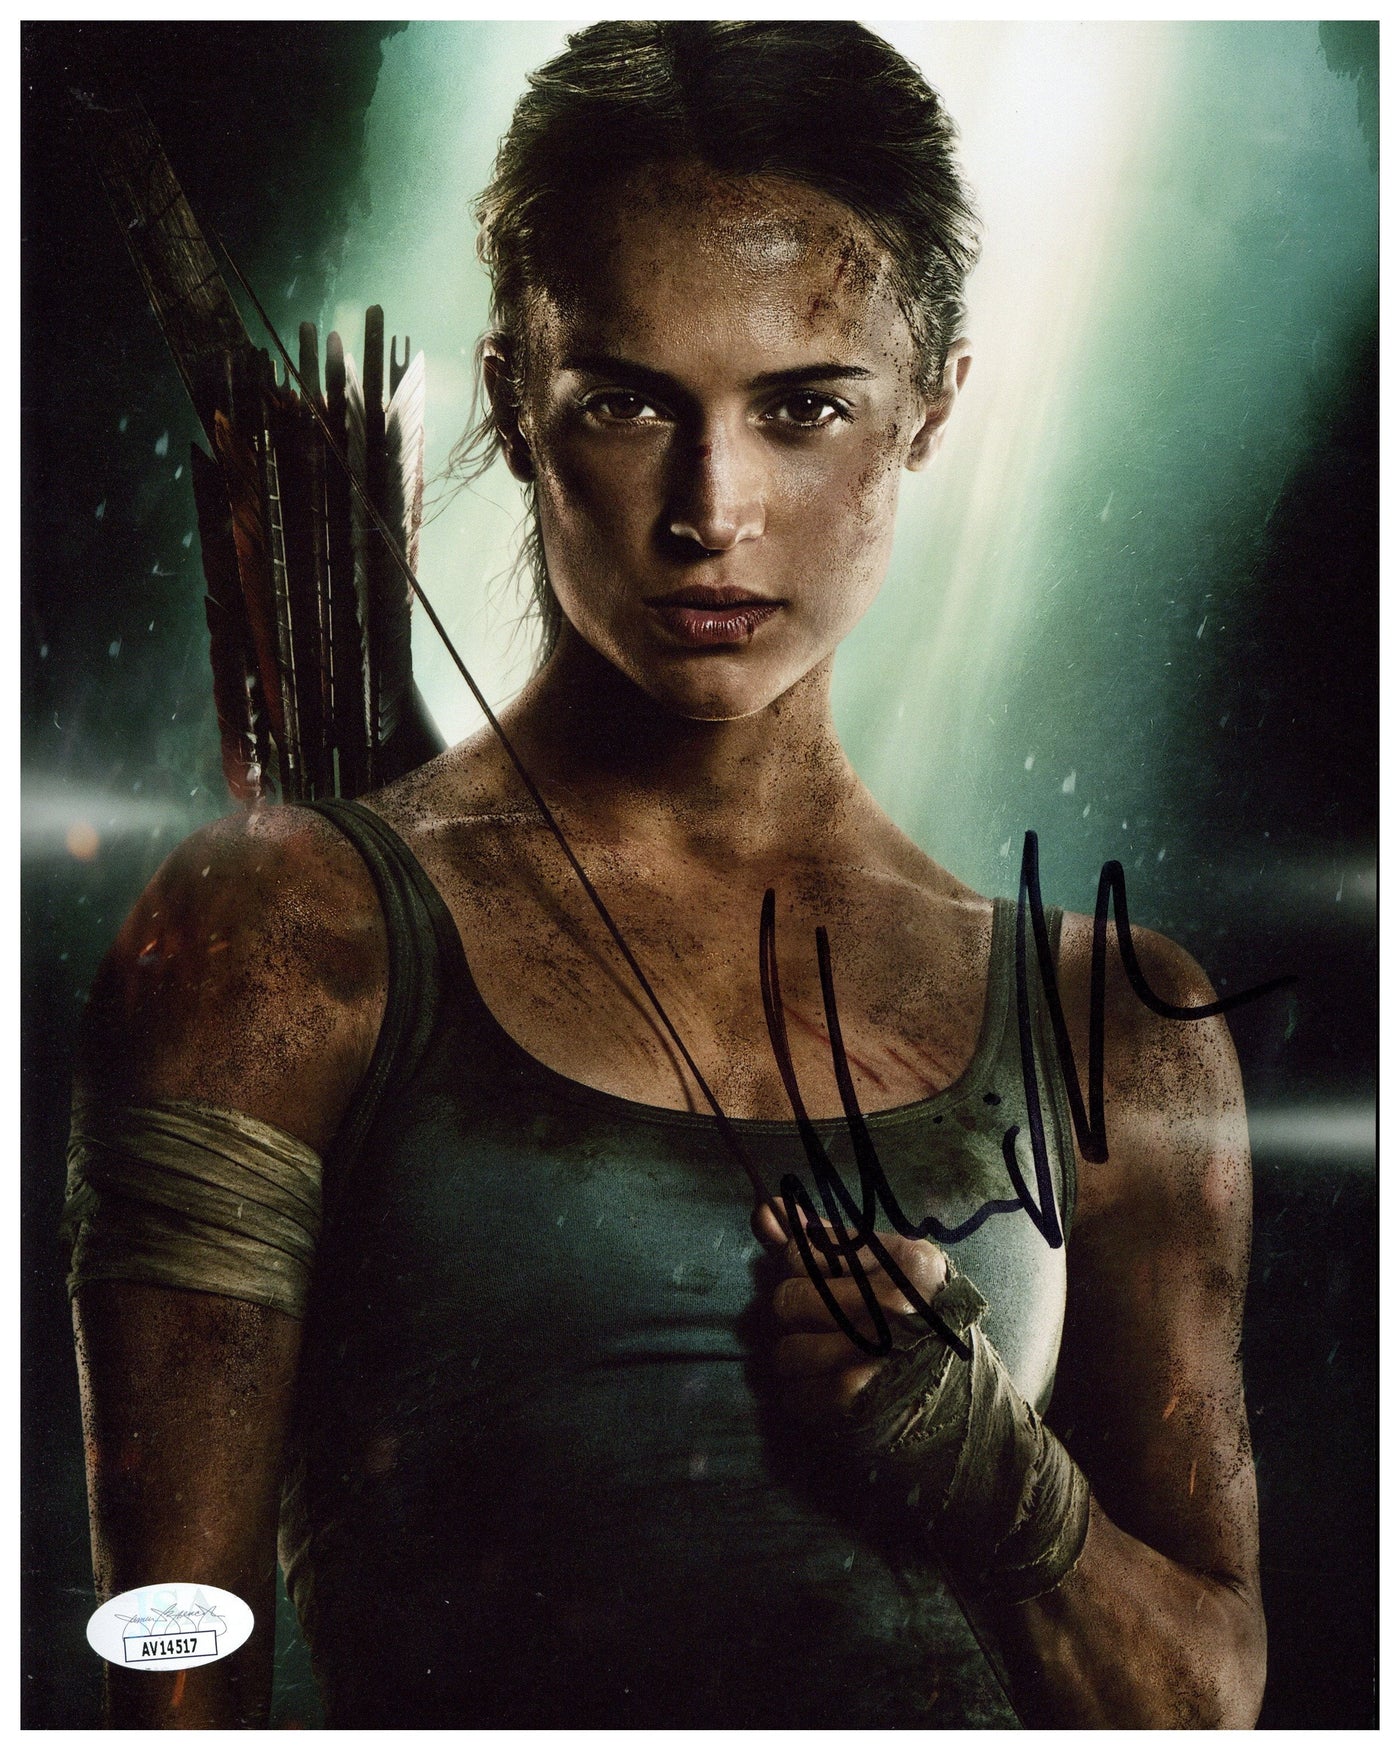 Alicia Vikander Signed 8x10 Photo Tomb Raider Autographed JSA COA #3